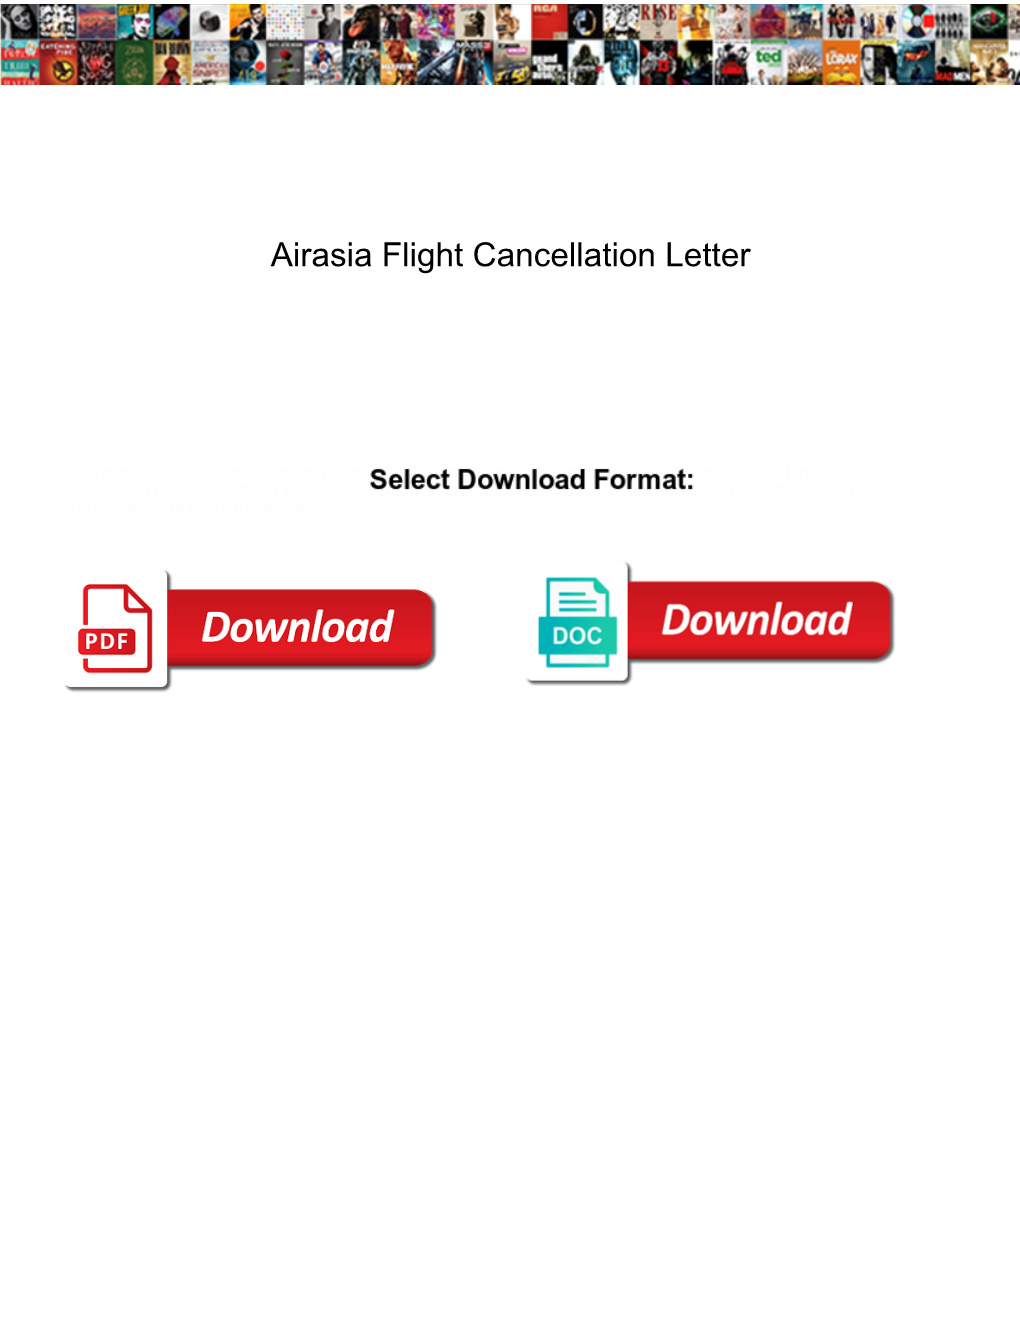 Airasia Flight Cancellation Letter - DocsLib